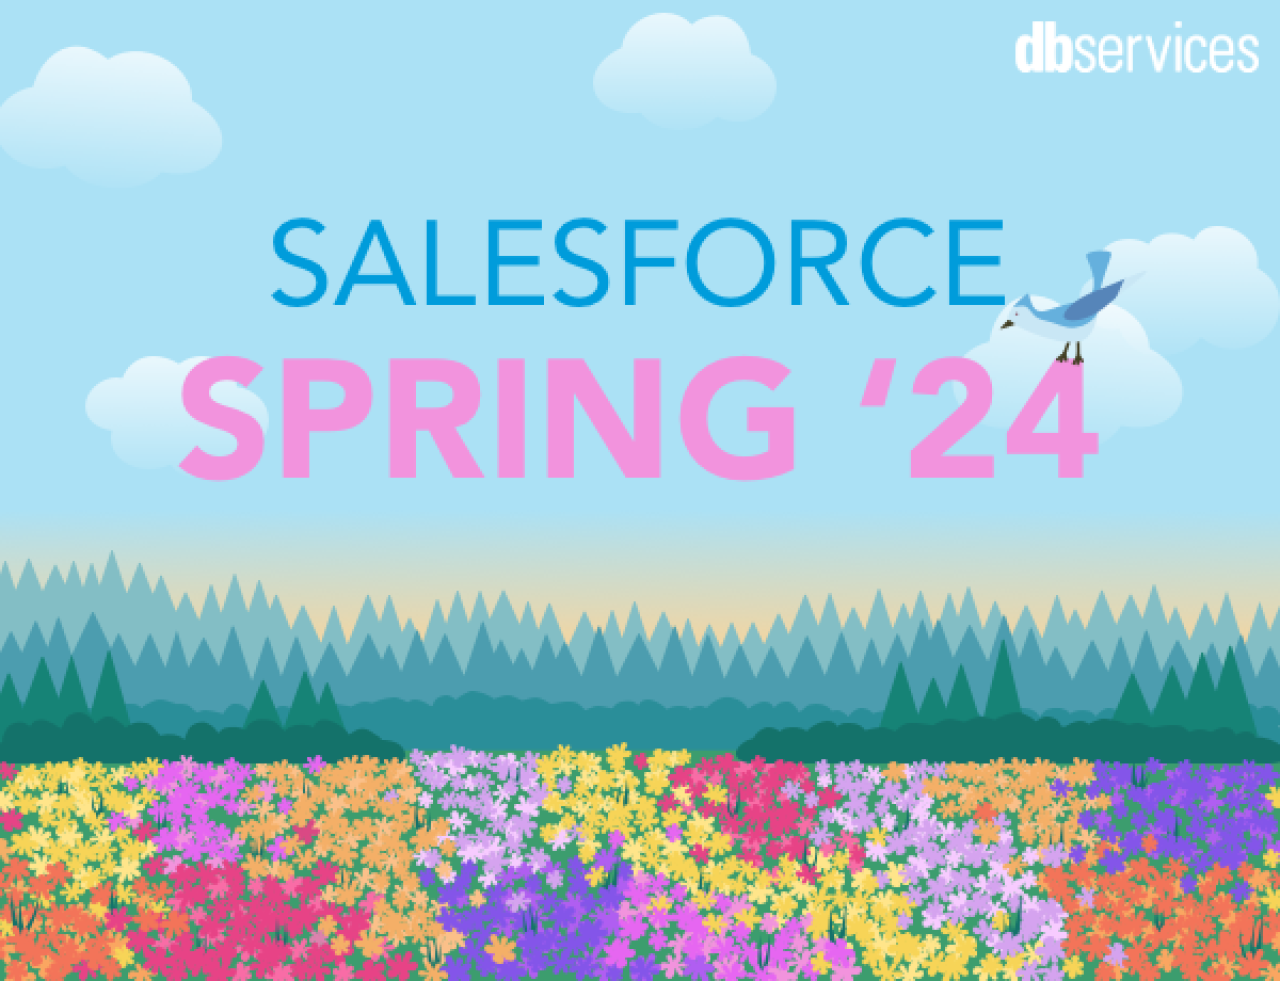 salesforce spring 24 release.